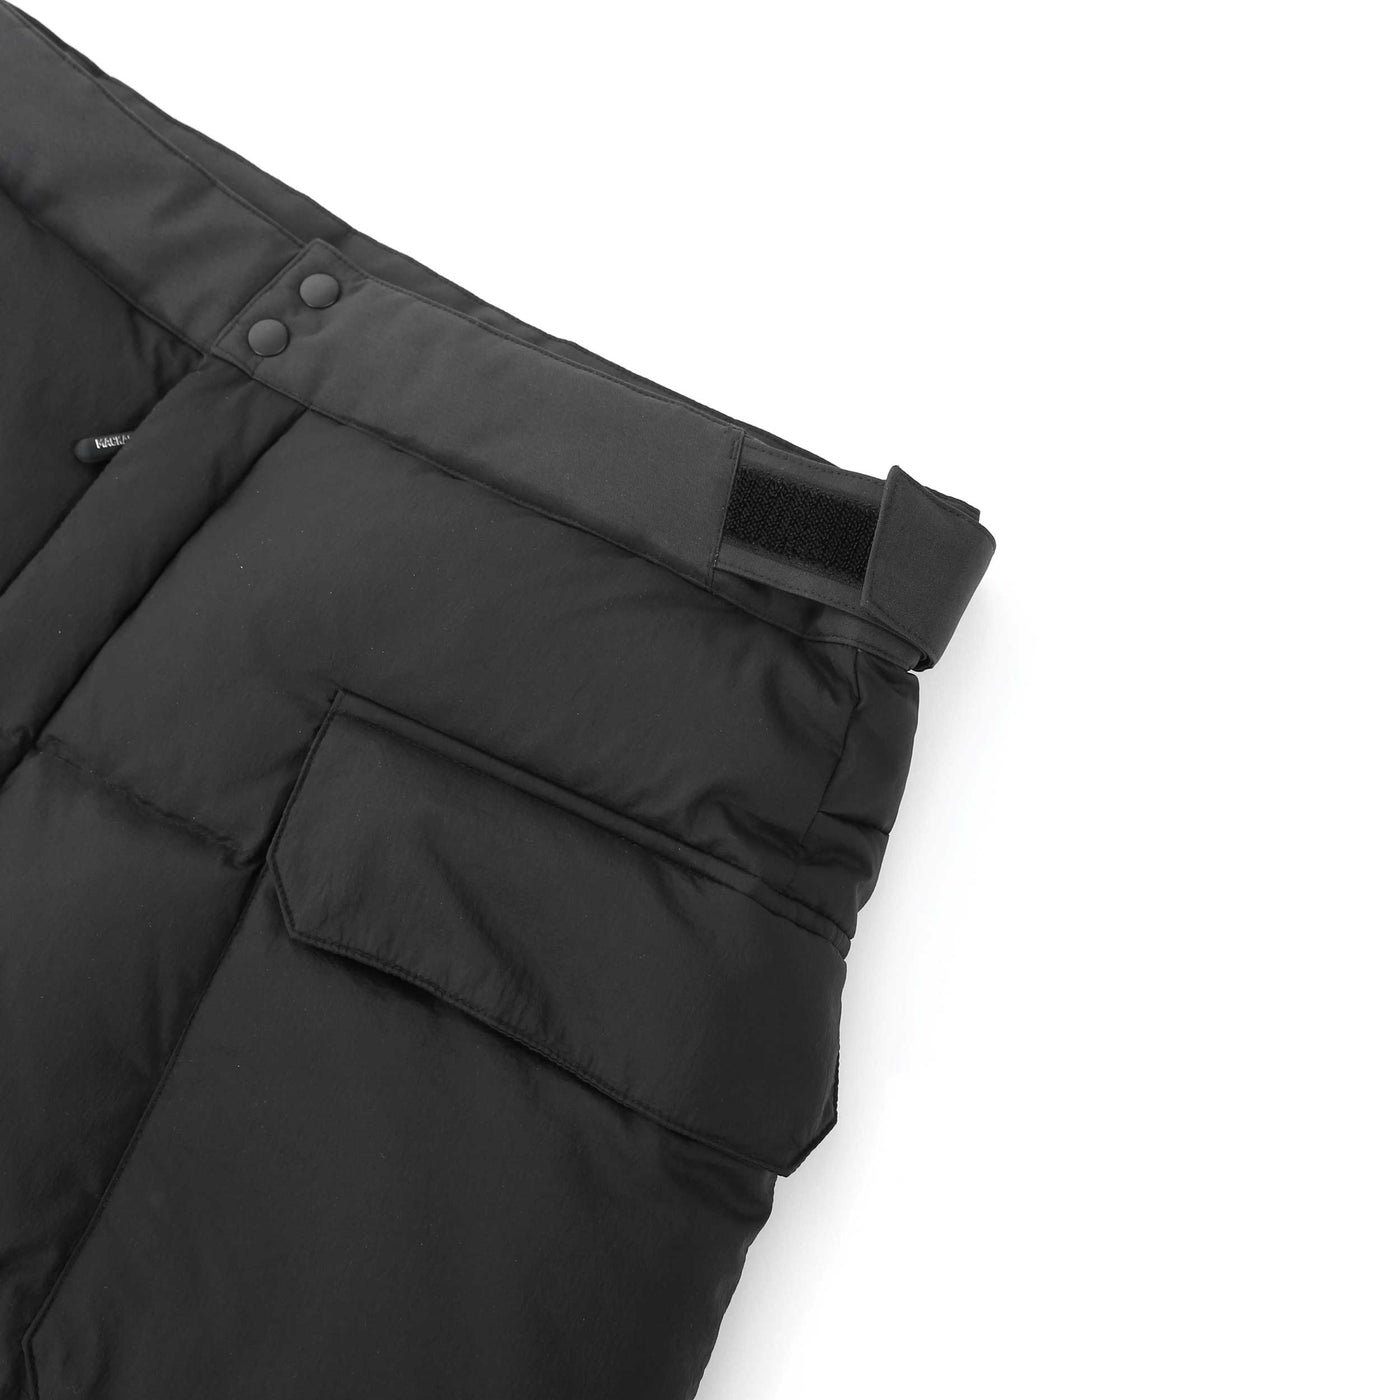 Mackage Remy Ski Pant in Black Waist Velcro